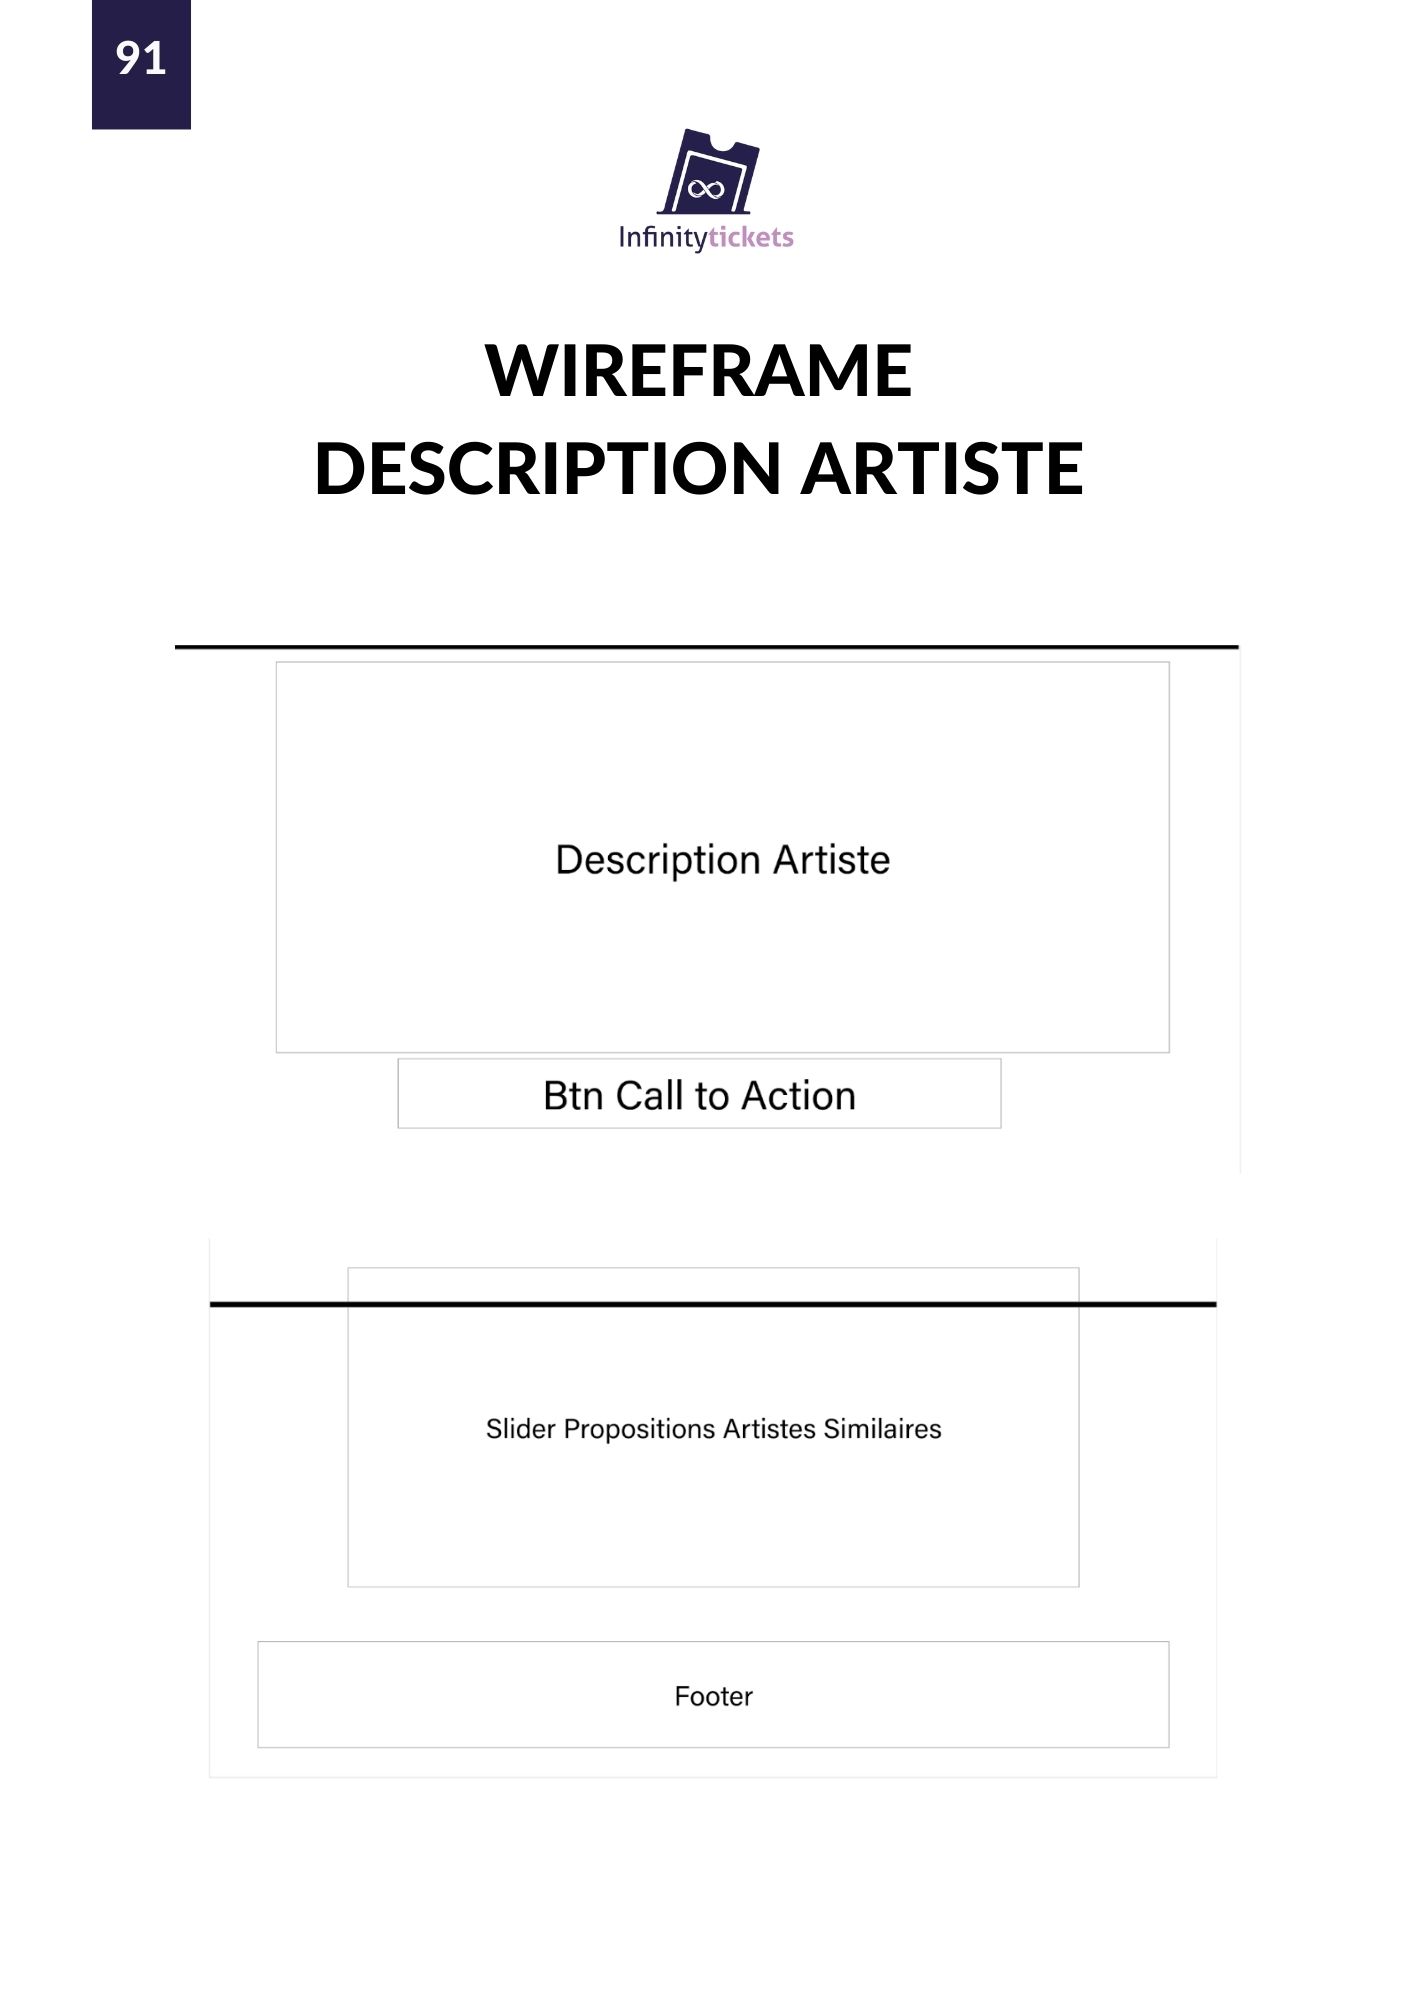 93 wireframe description artiste